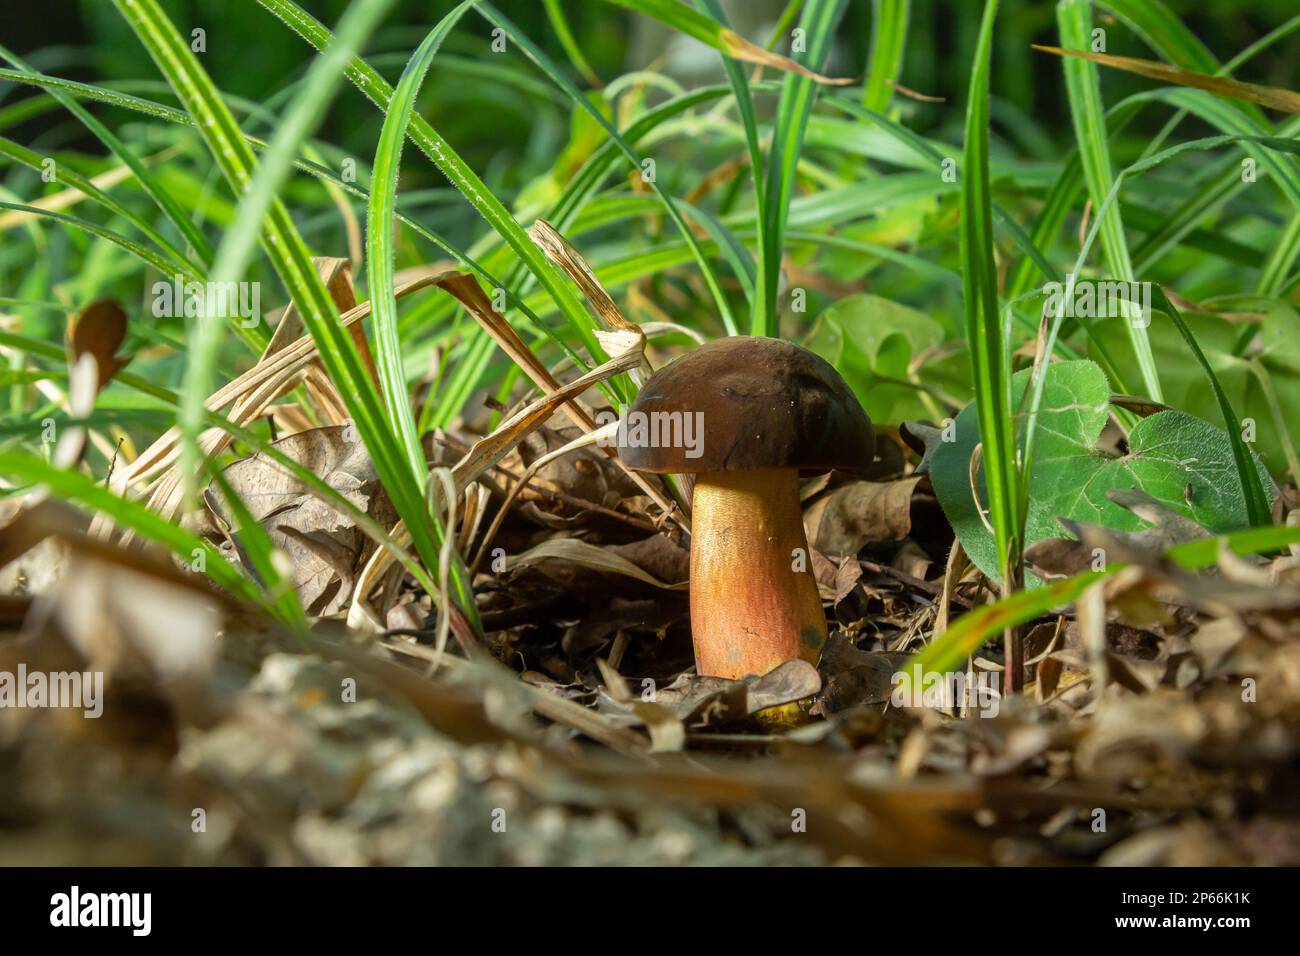 Neoboletus luridiformis known as Boletus luridiformis - edible mushroom. Fungus in the natural environment. Stock Photo